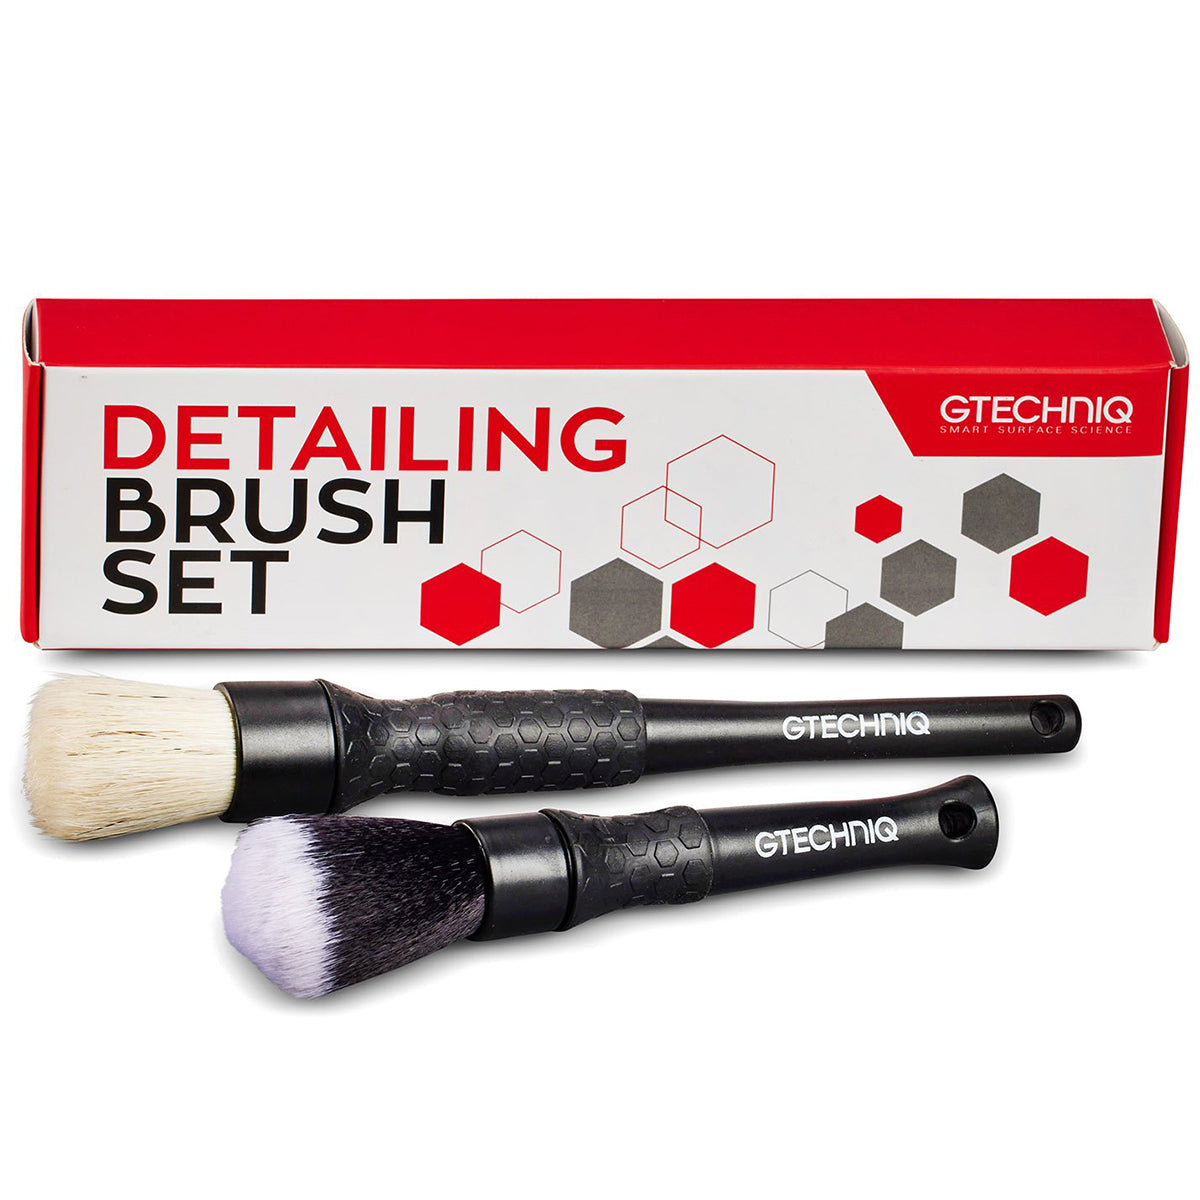 Gtechniq Detailing Brushes